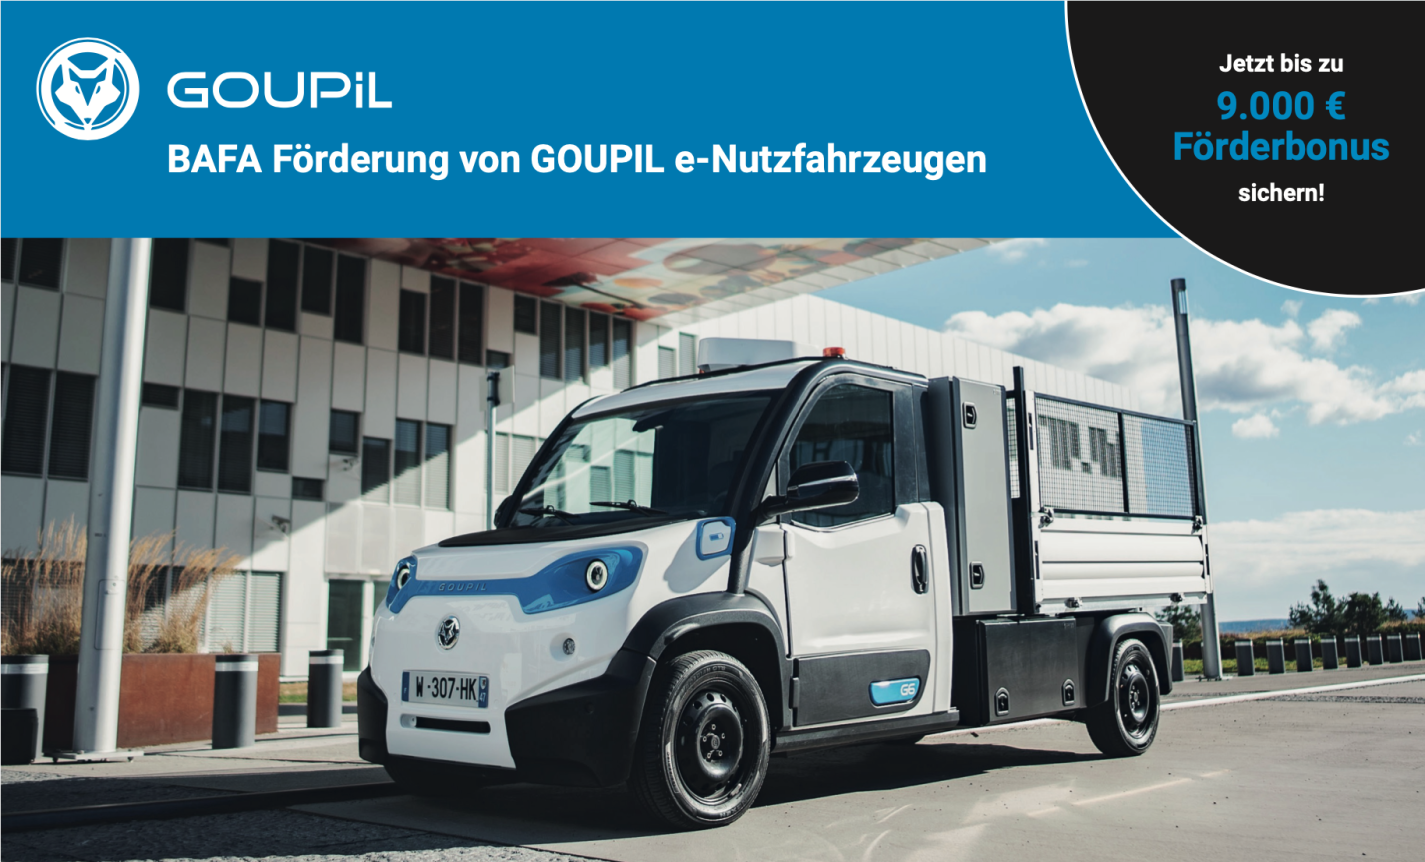 Goupil BAFA Förderung von E-Nutzfahrzeugen Förderbonus